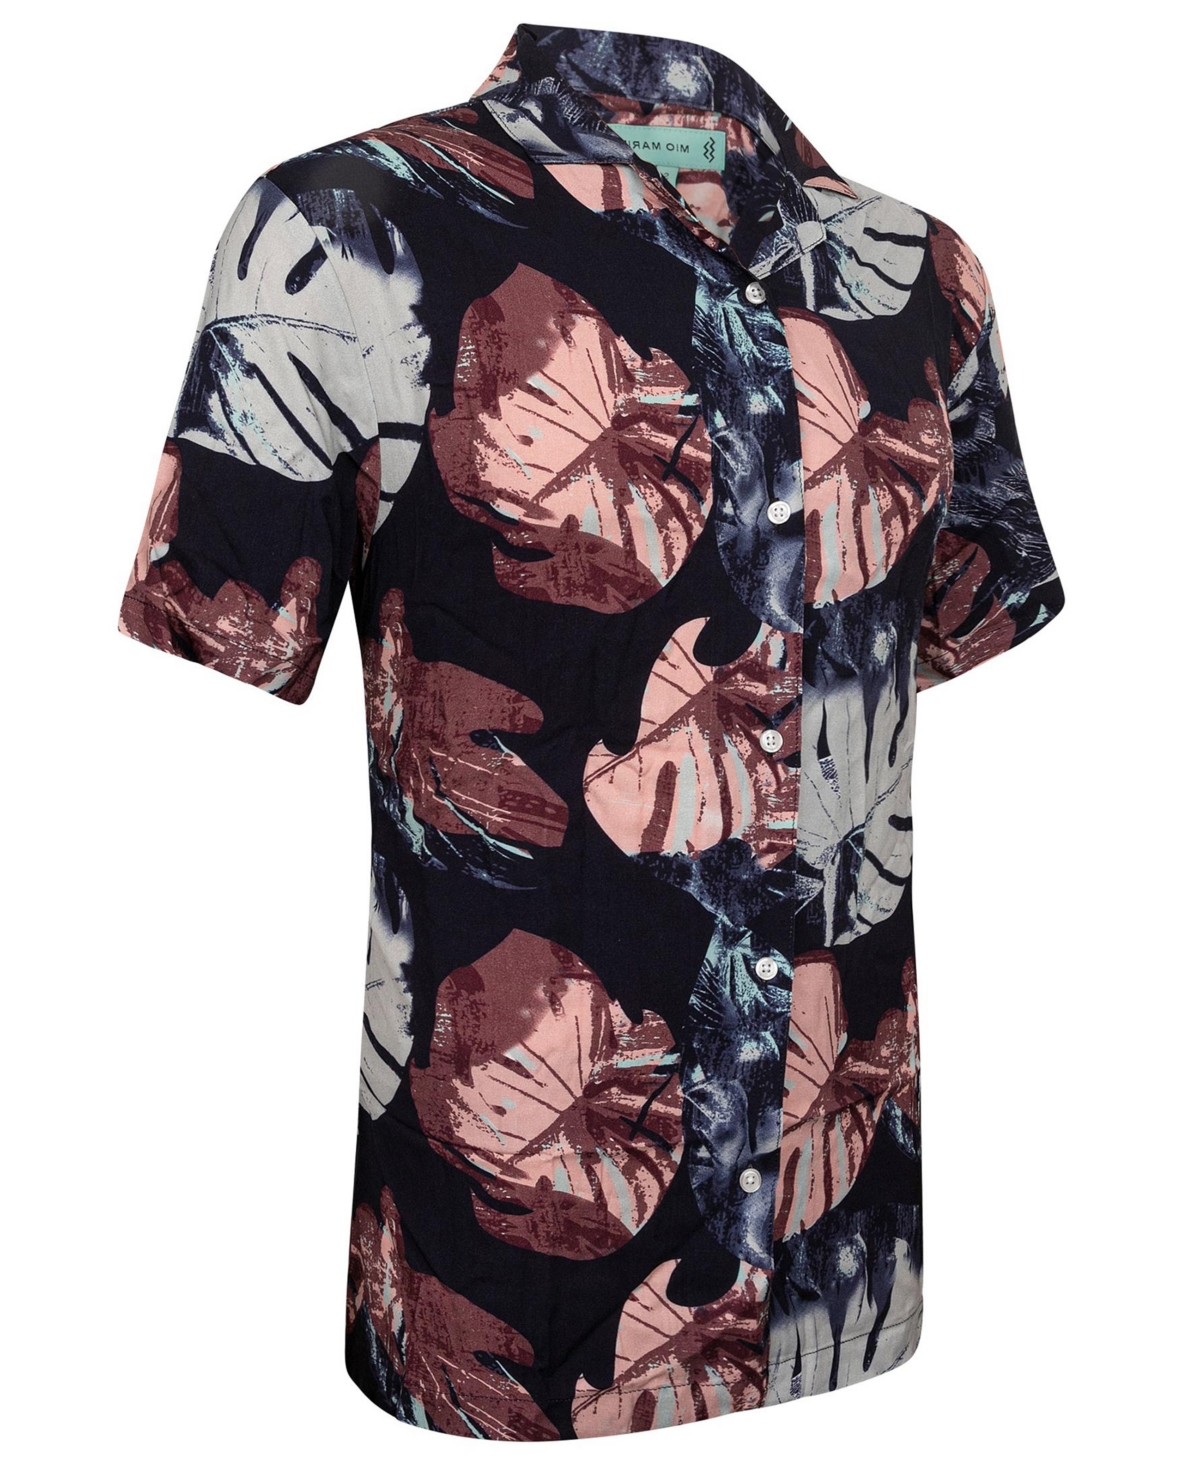 Mens Casual Button-Down Hawaiian Shirt - Short Sleeve - Plus Size - Vibrant rainforest